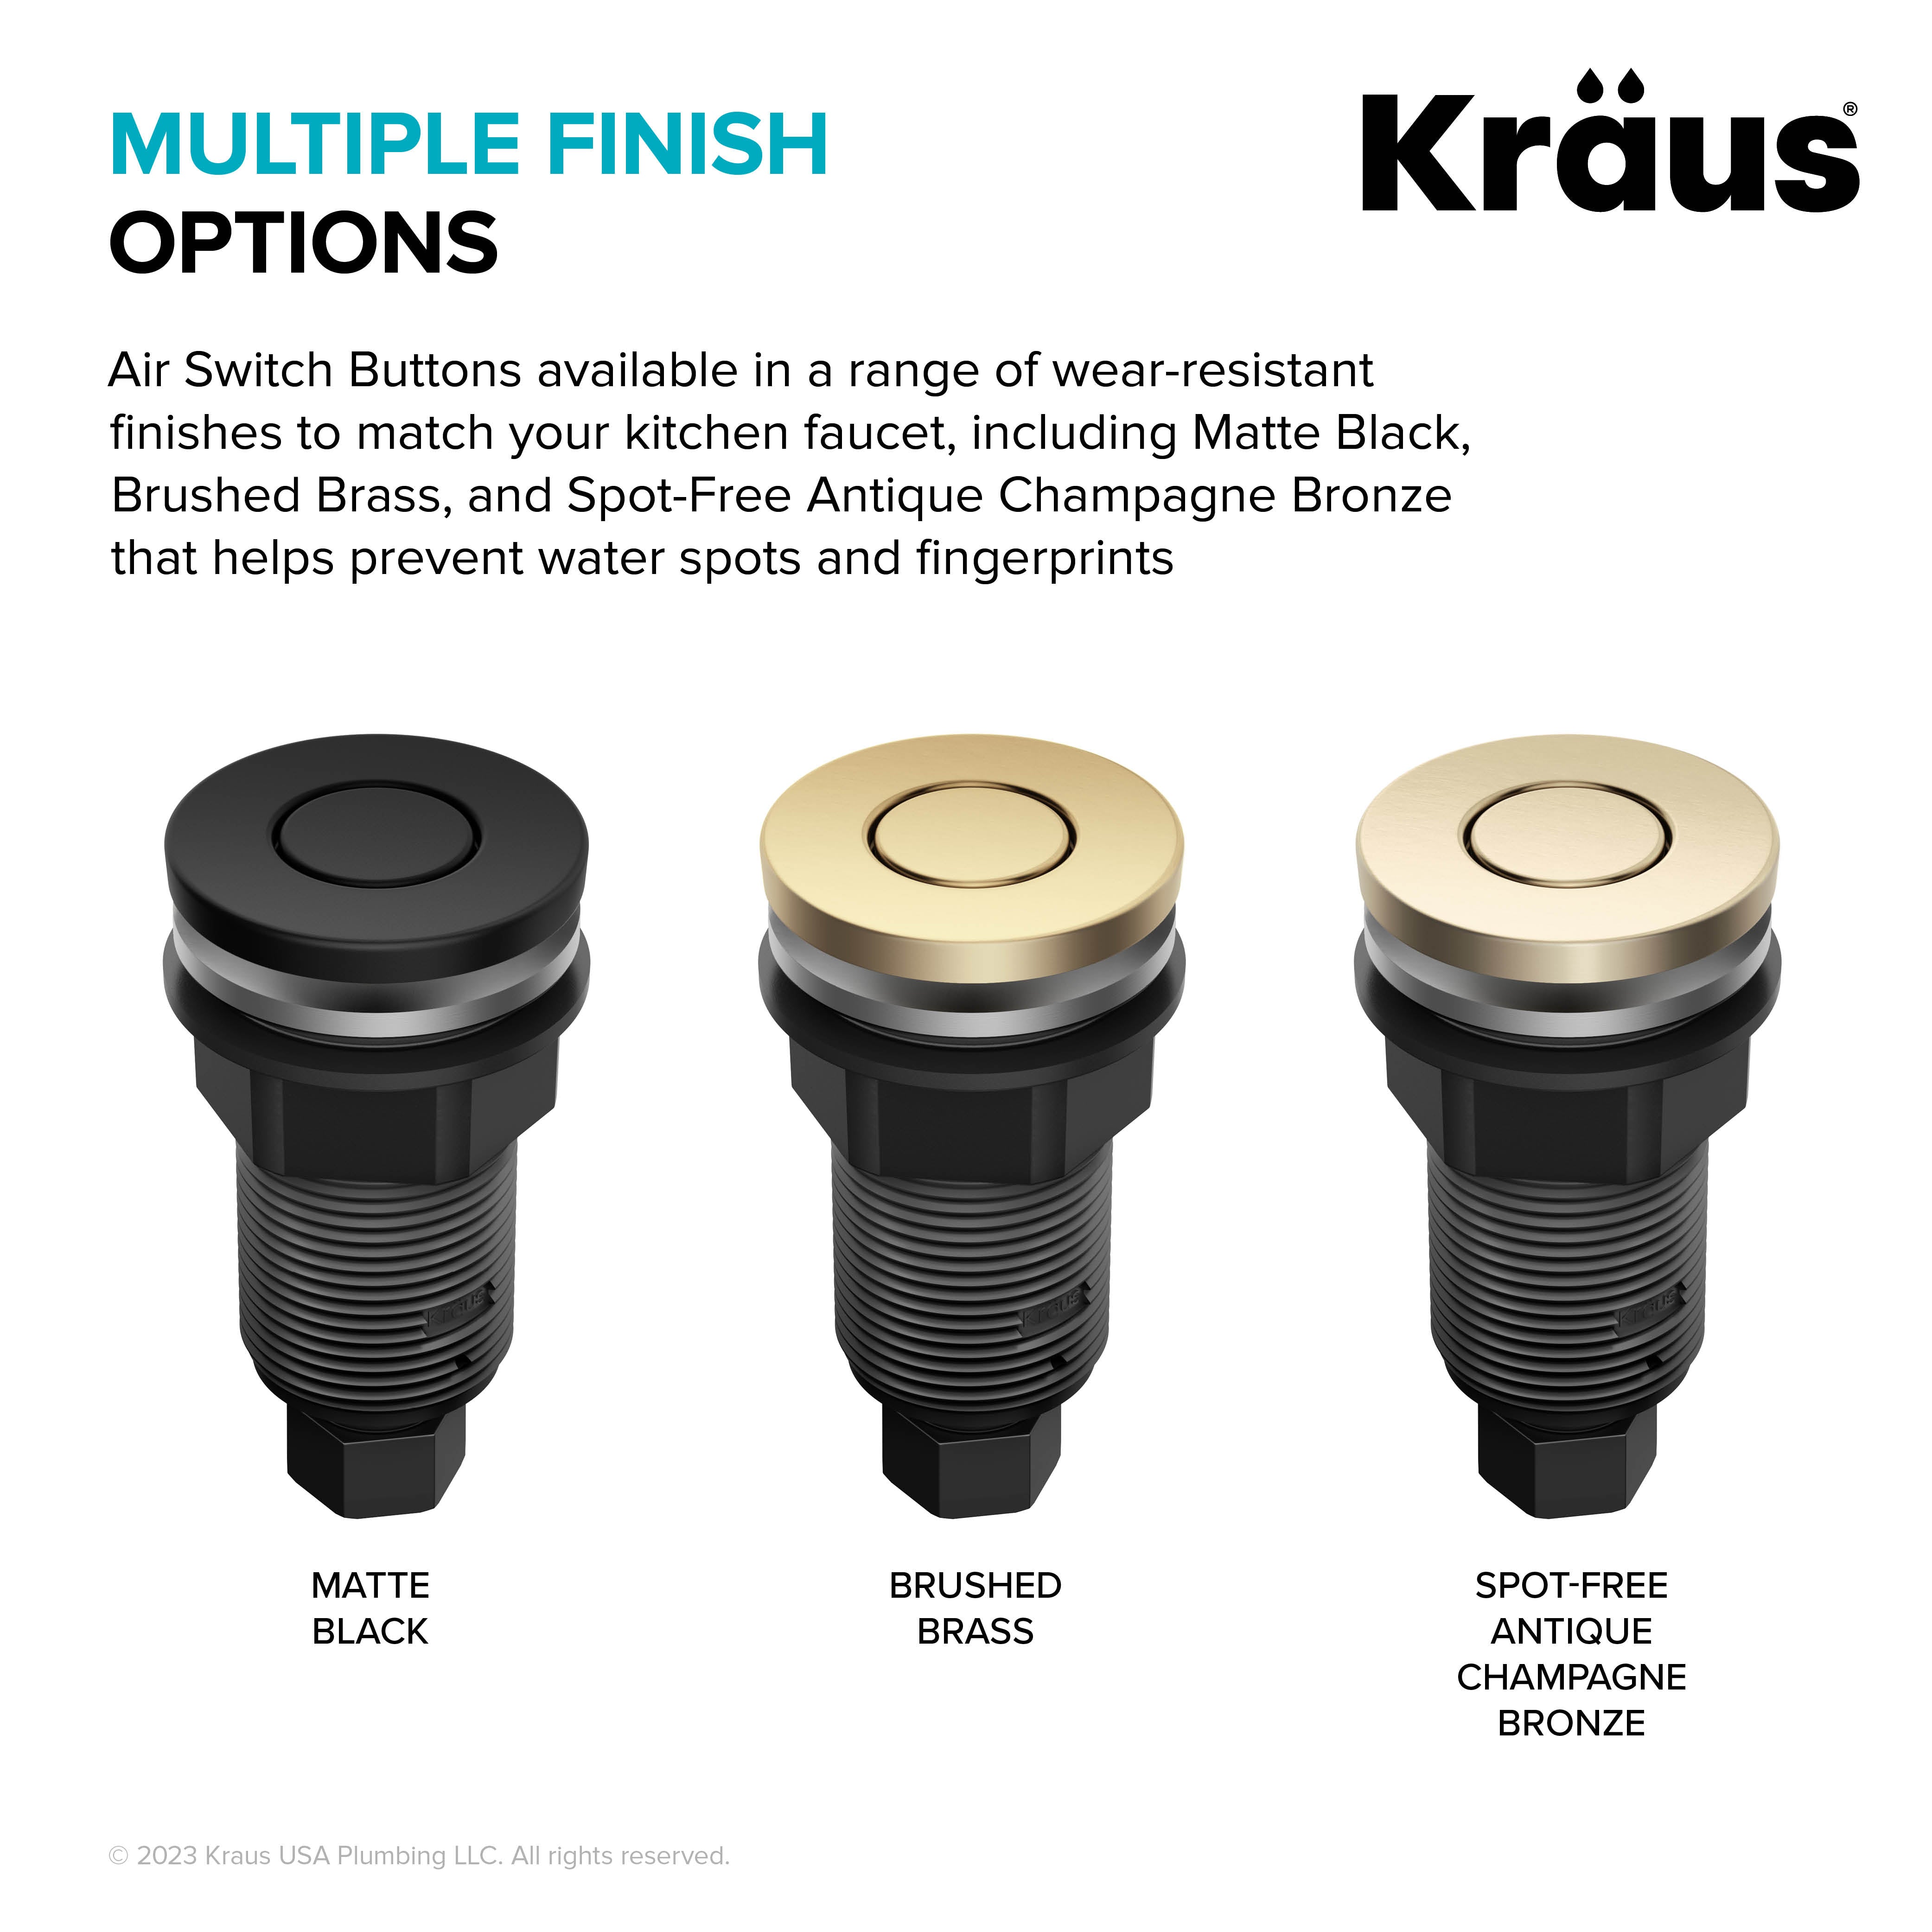 KRAUS Contemporary Flat Top Button Garbage Disposal Air Switch Kit in Brushed Brass